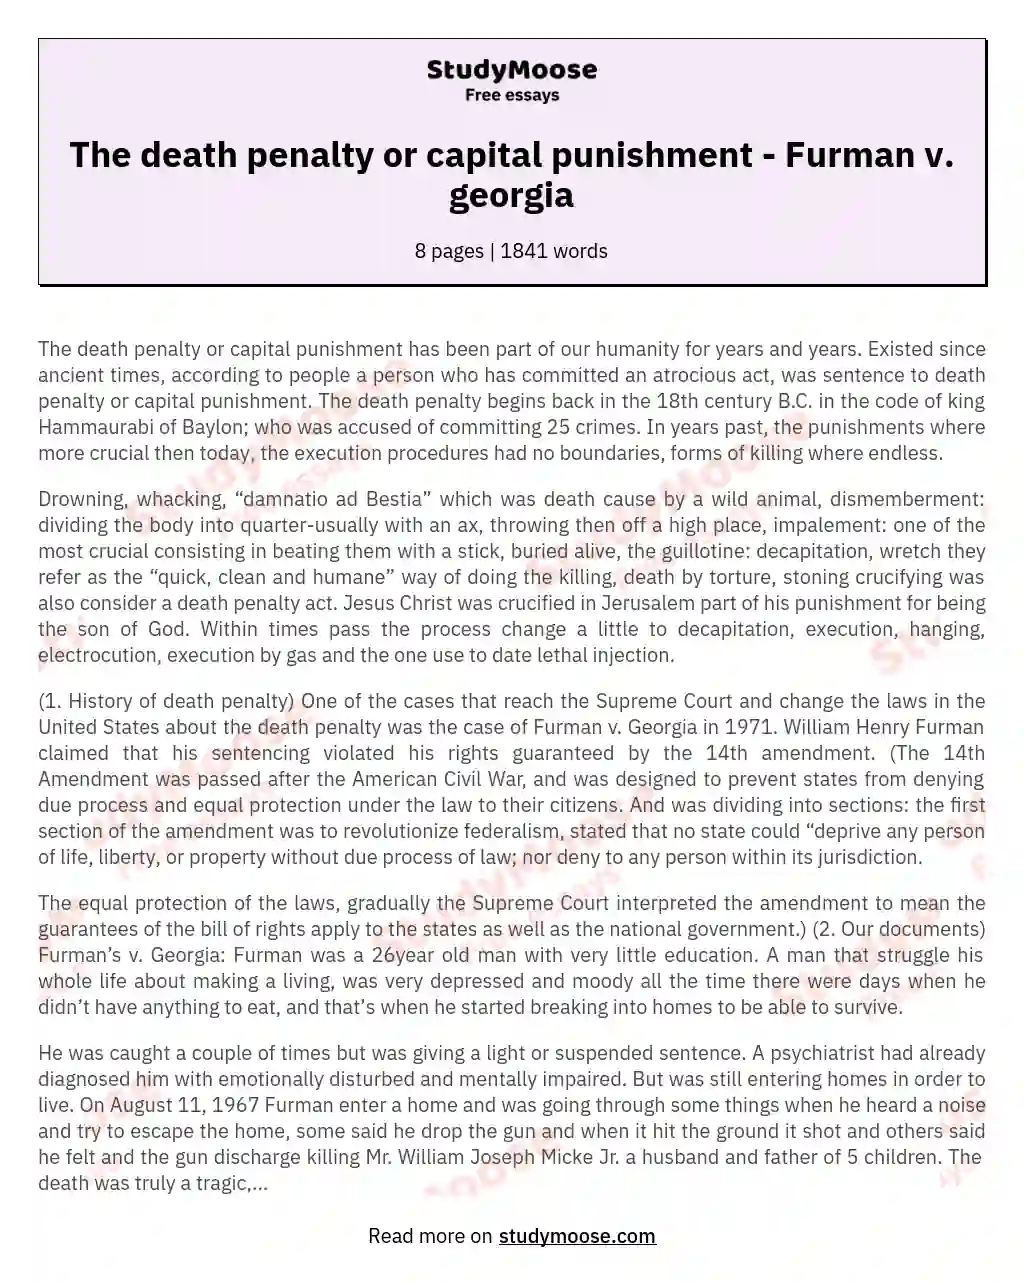 The death penalty or capital punishment - Furman v. georgia